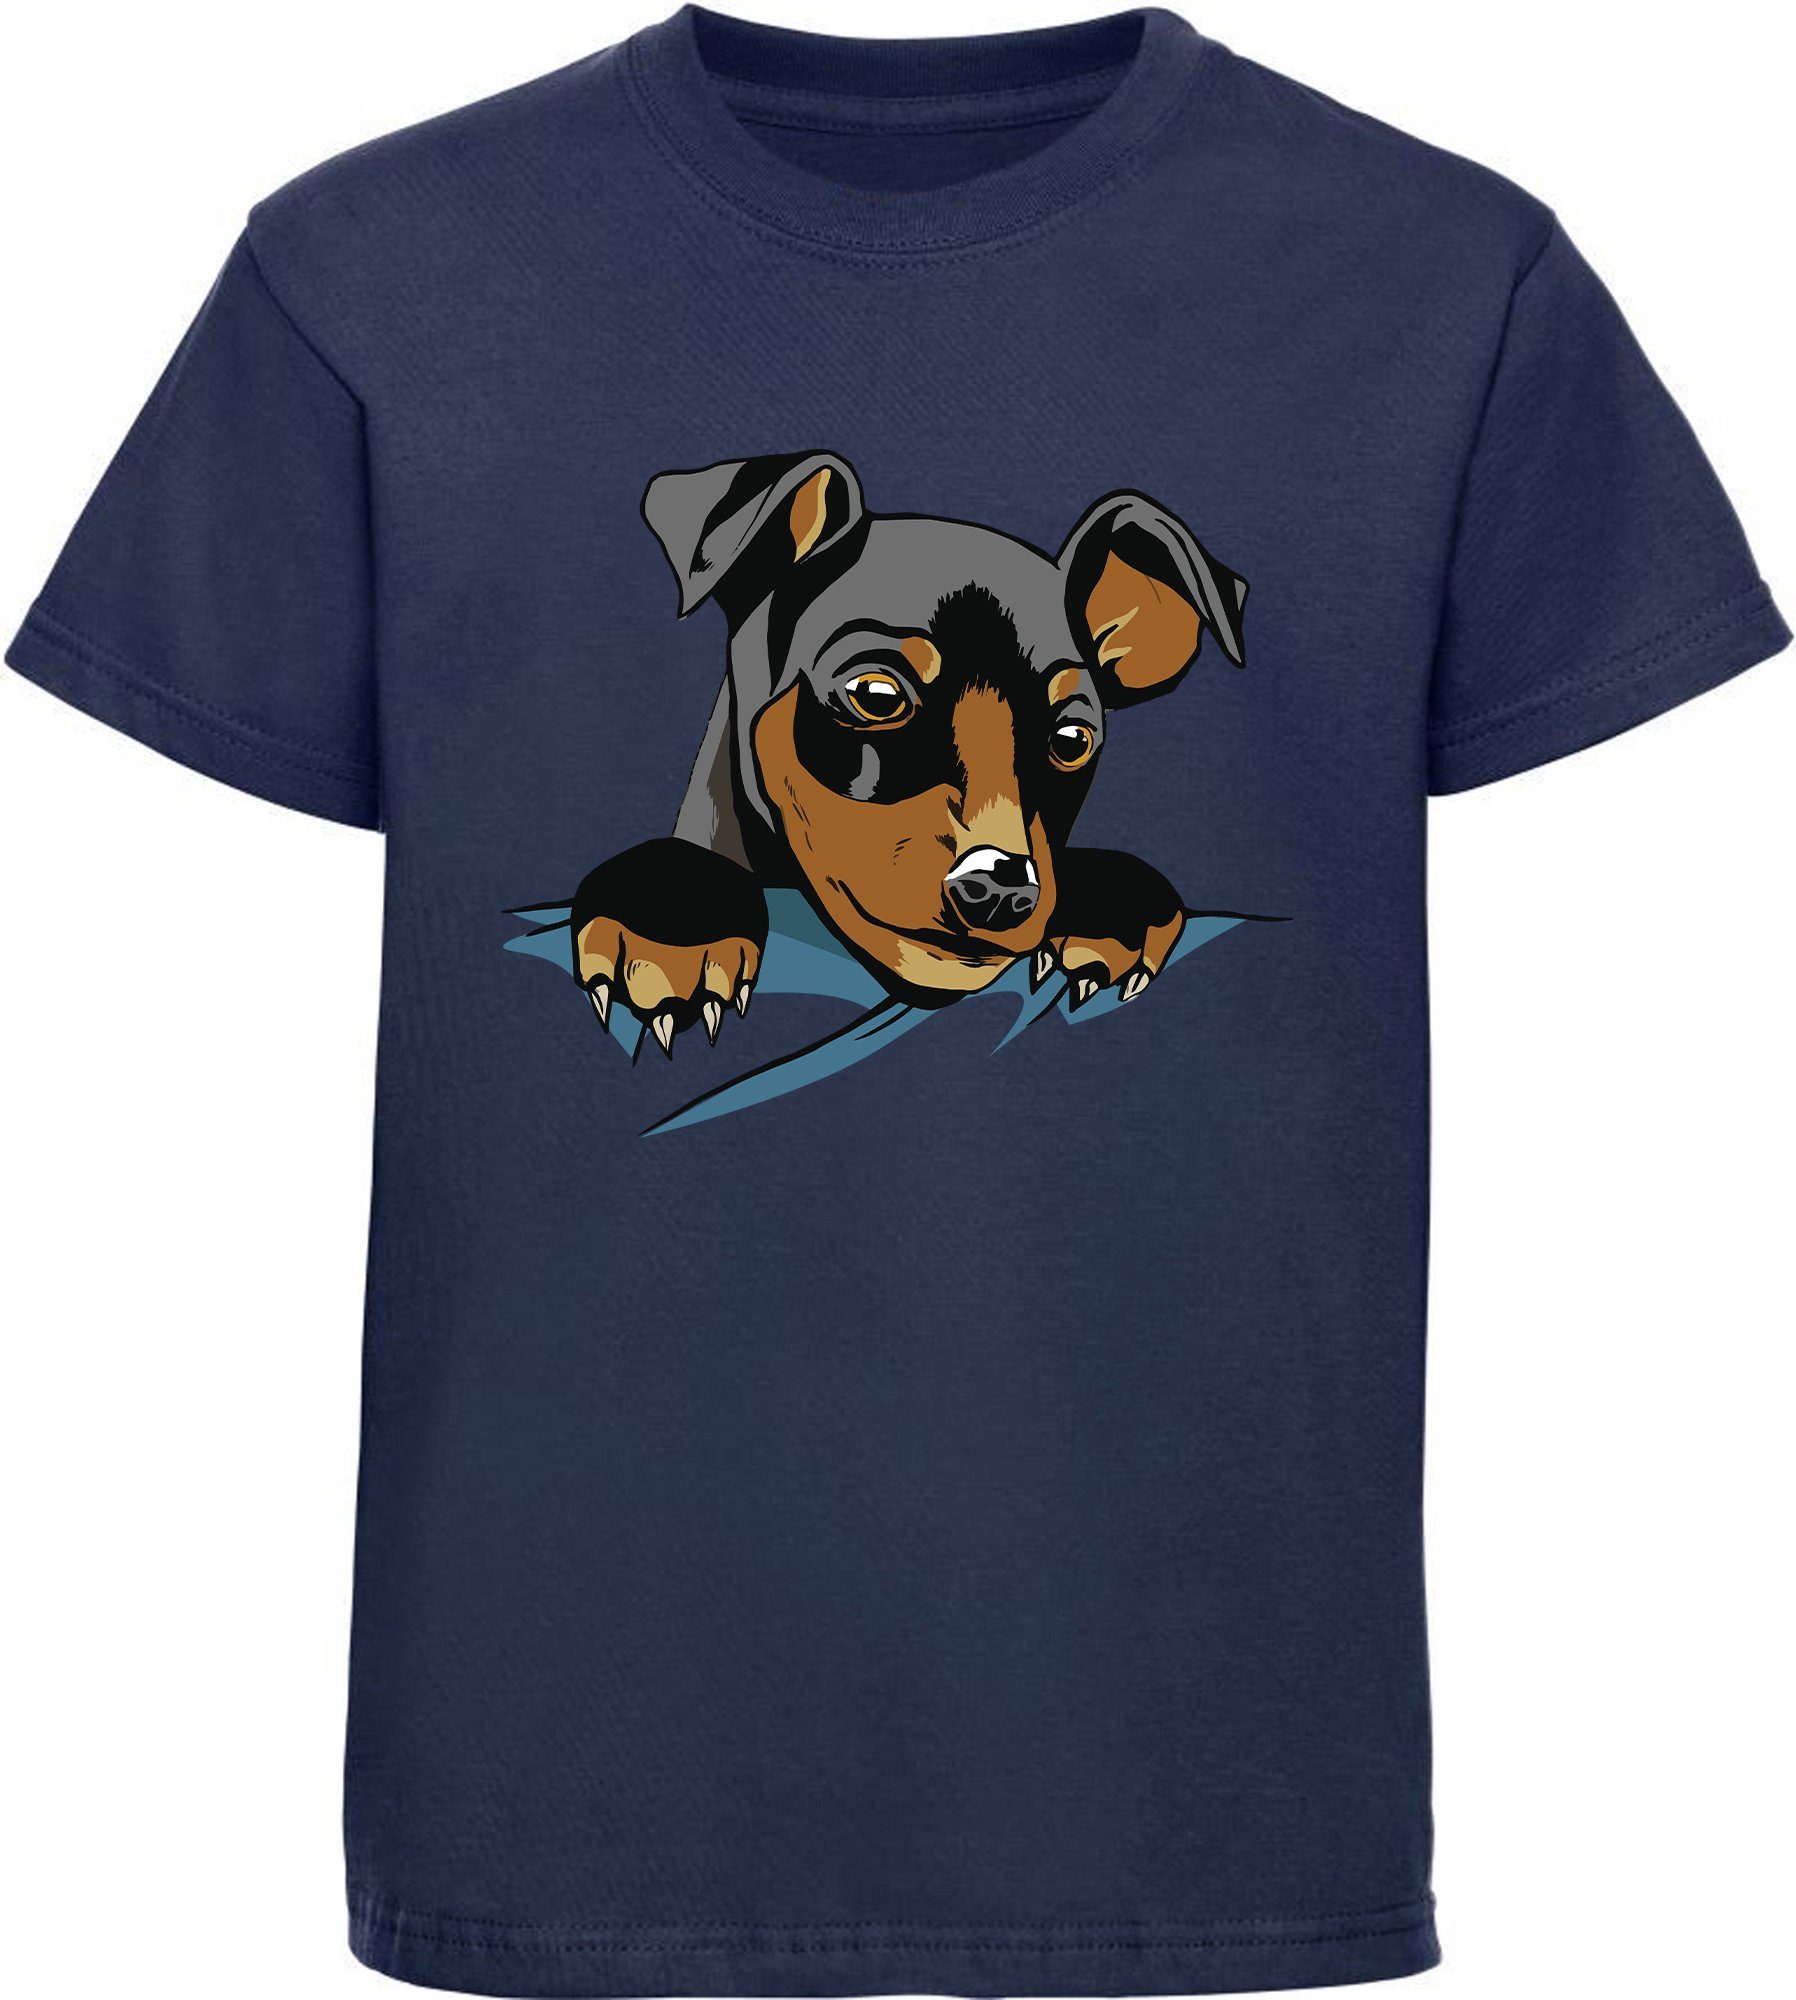 MyDesign24 Print-Shirt bedrucktes Kinder Hunde T-Shirt - Süßer Welpe Baumwollshirt mit Aufdruck, i227 navy blau